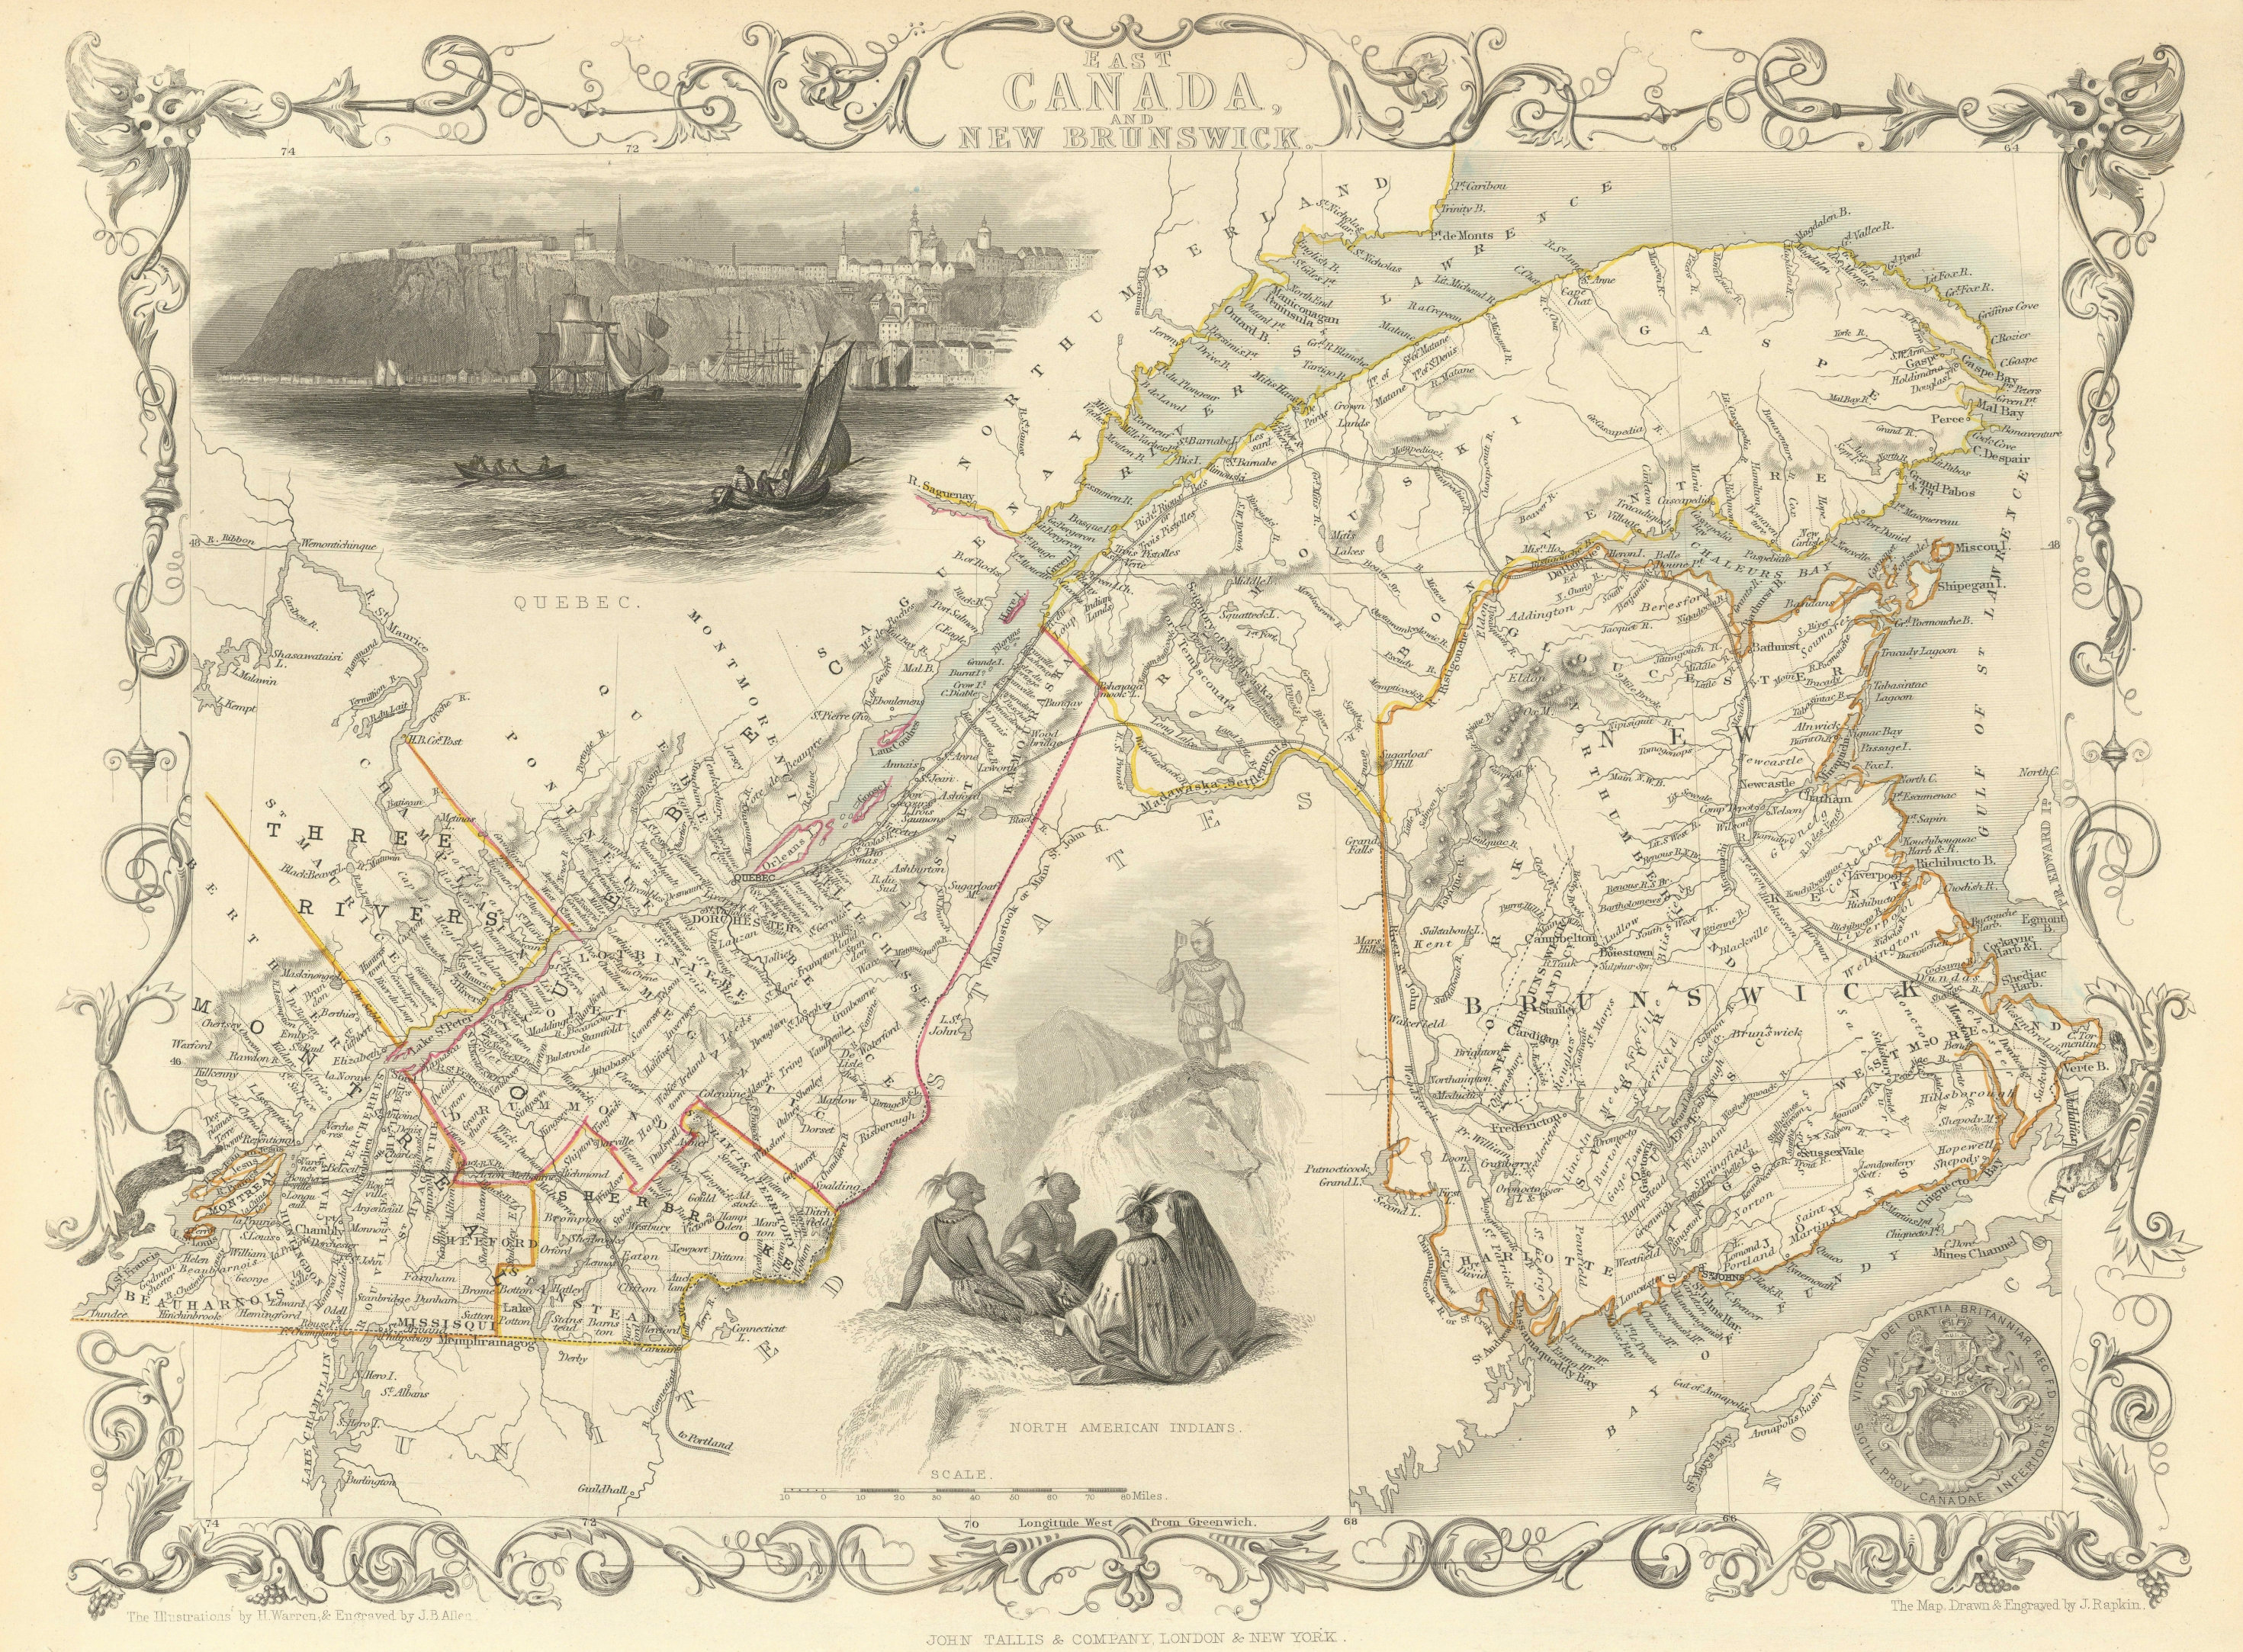 Associate Product EAST CANADA & NEW BRUNSWICK'. Quebec. Québec city view. TALLIS/RAPKIN 1851 map